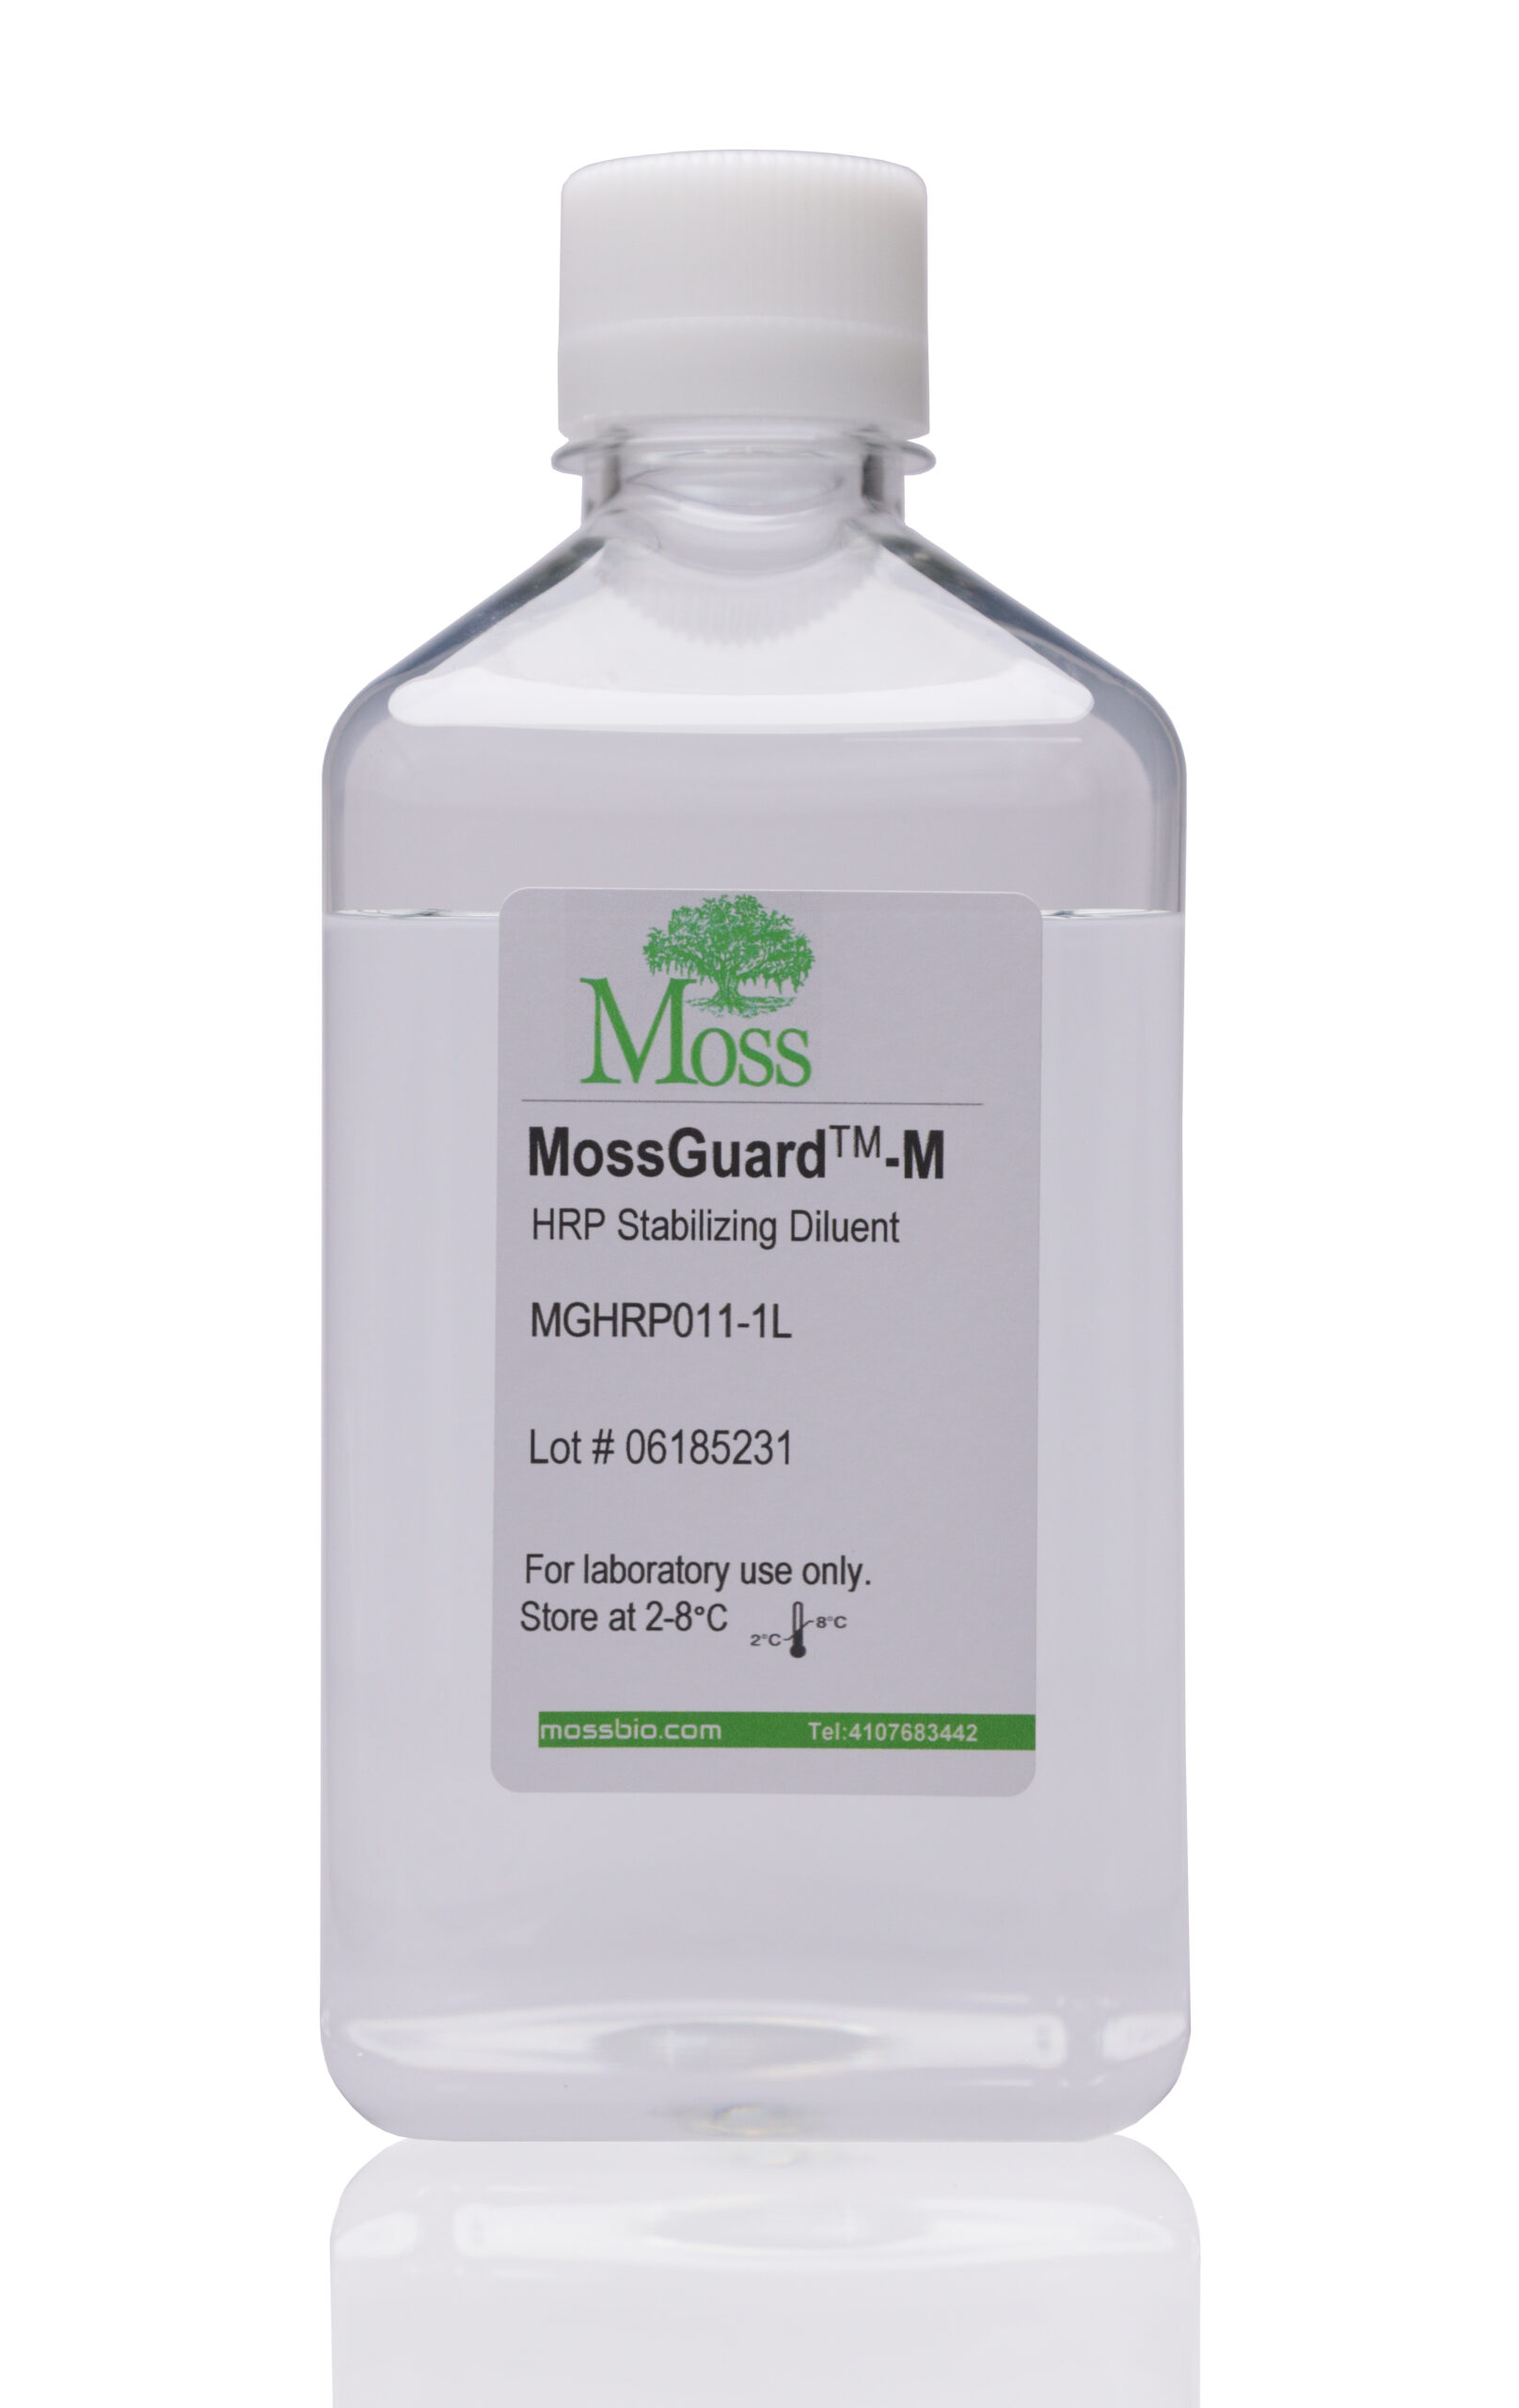 MossGuard-M HRP Stabilizing Diluent